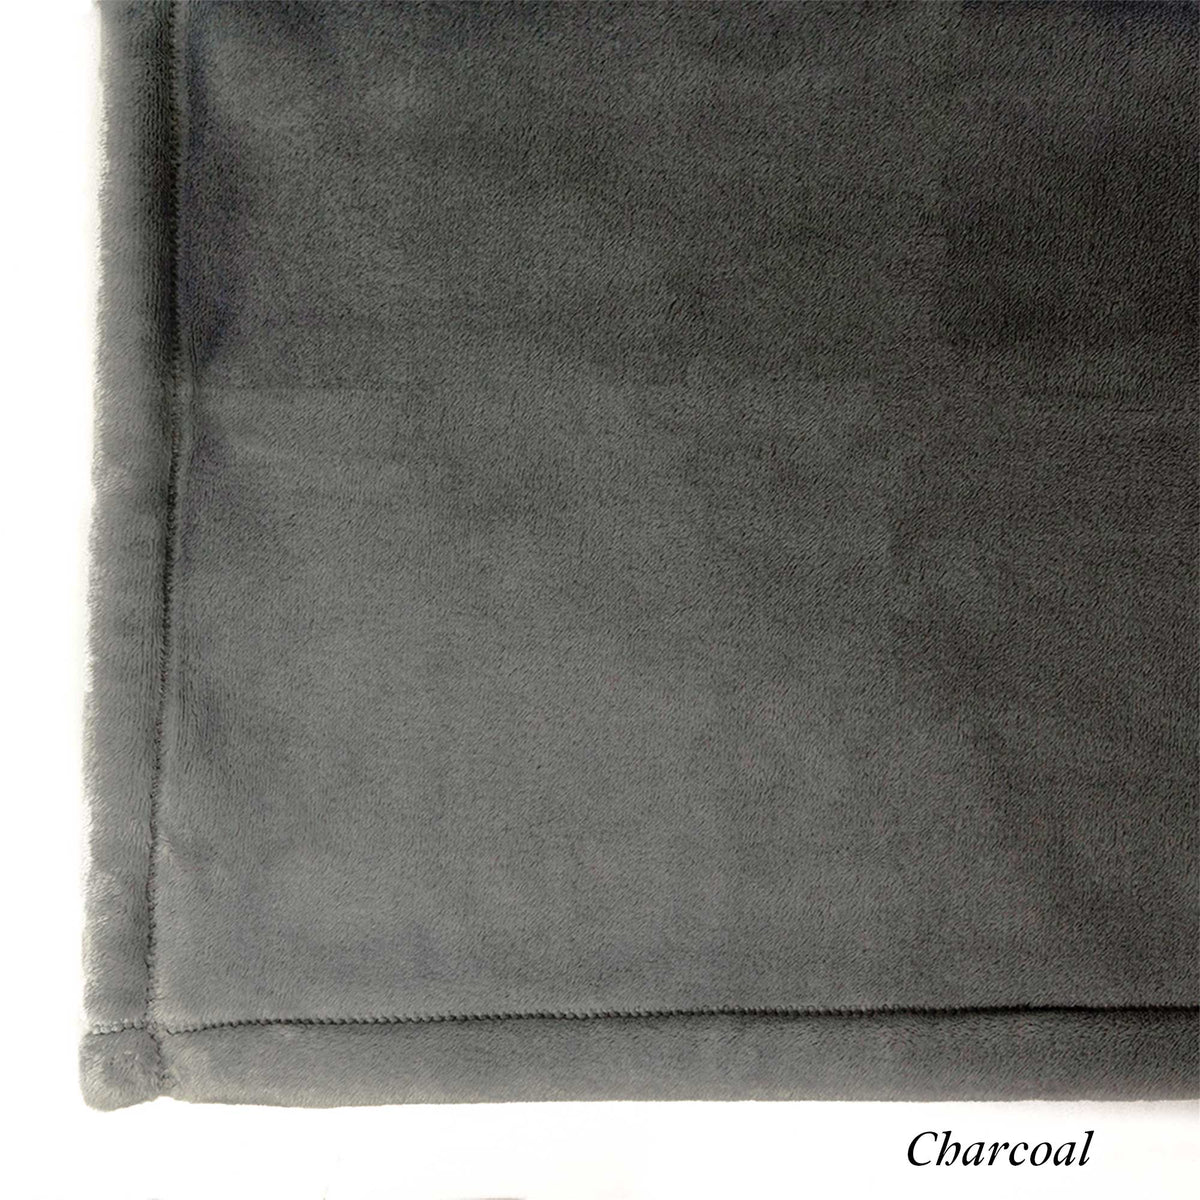 Chracoal Luster Loft Fleece Swatch - Luster Loft Fleece Throw Pillows - American blanket company 